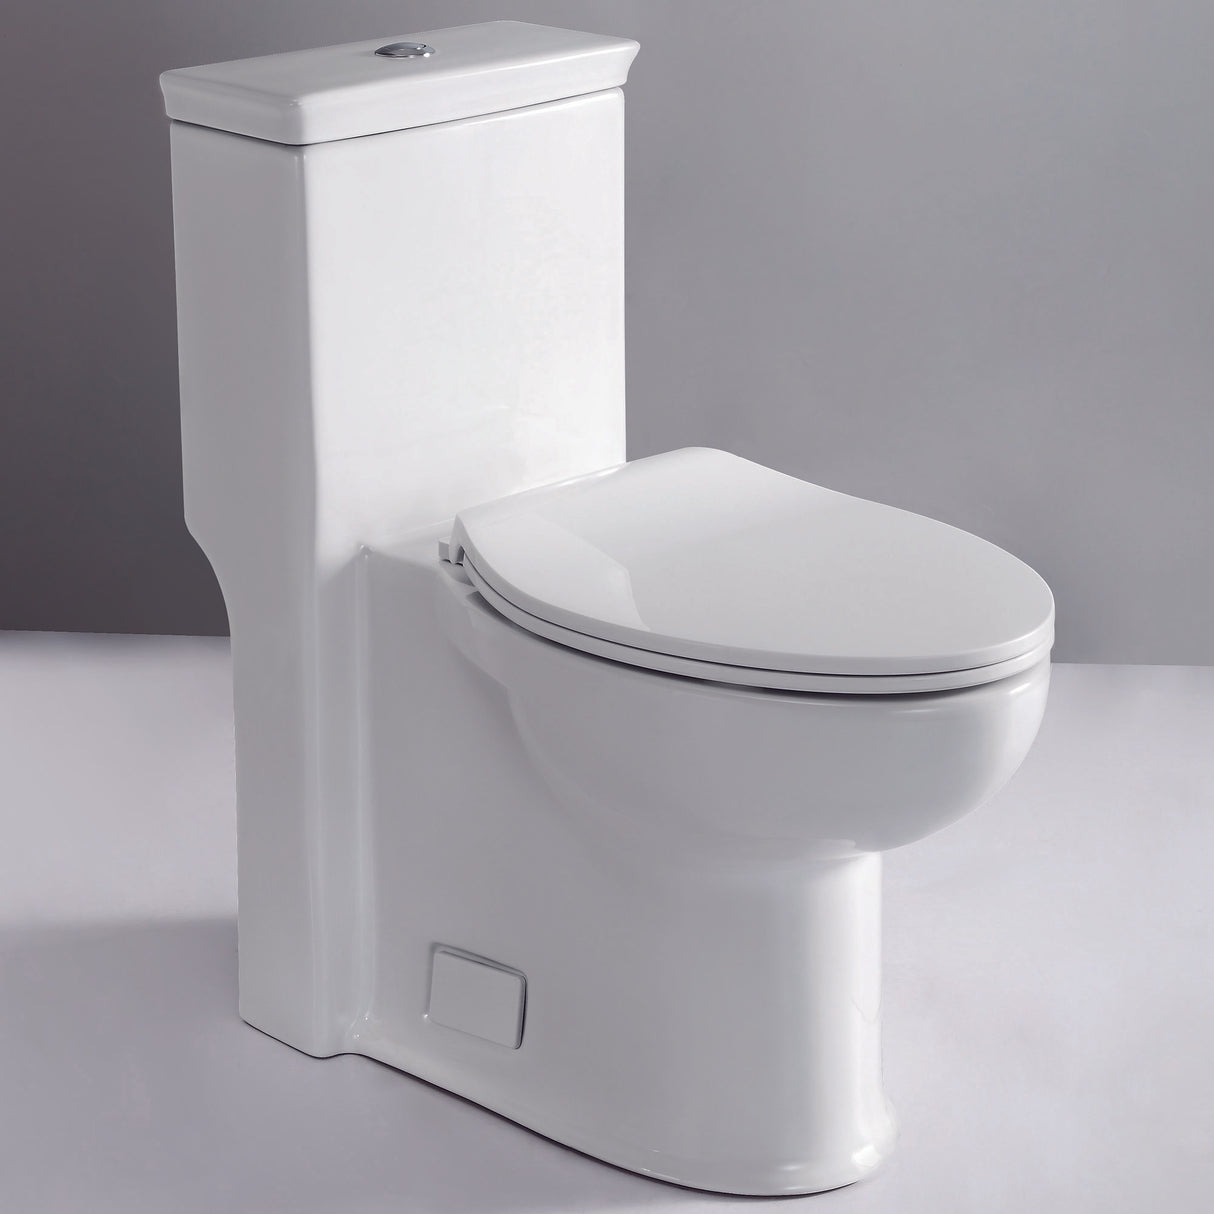 EAGO TB377 ADA Compliant One Piece Single Flush Toilet